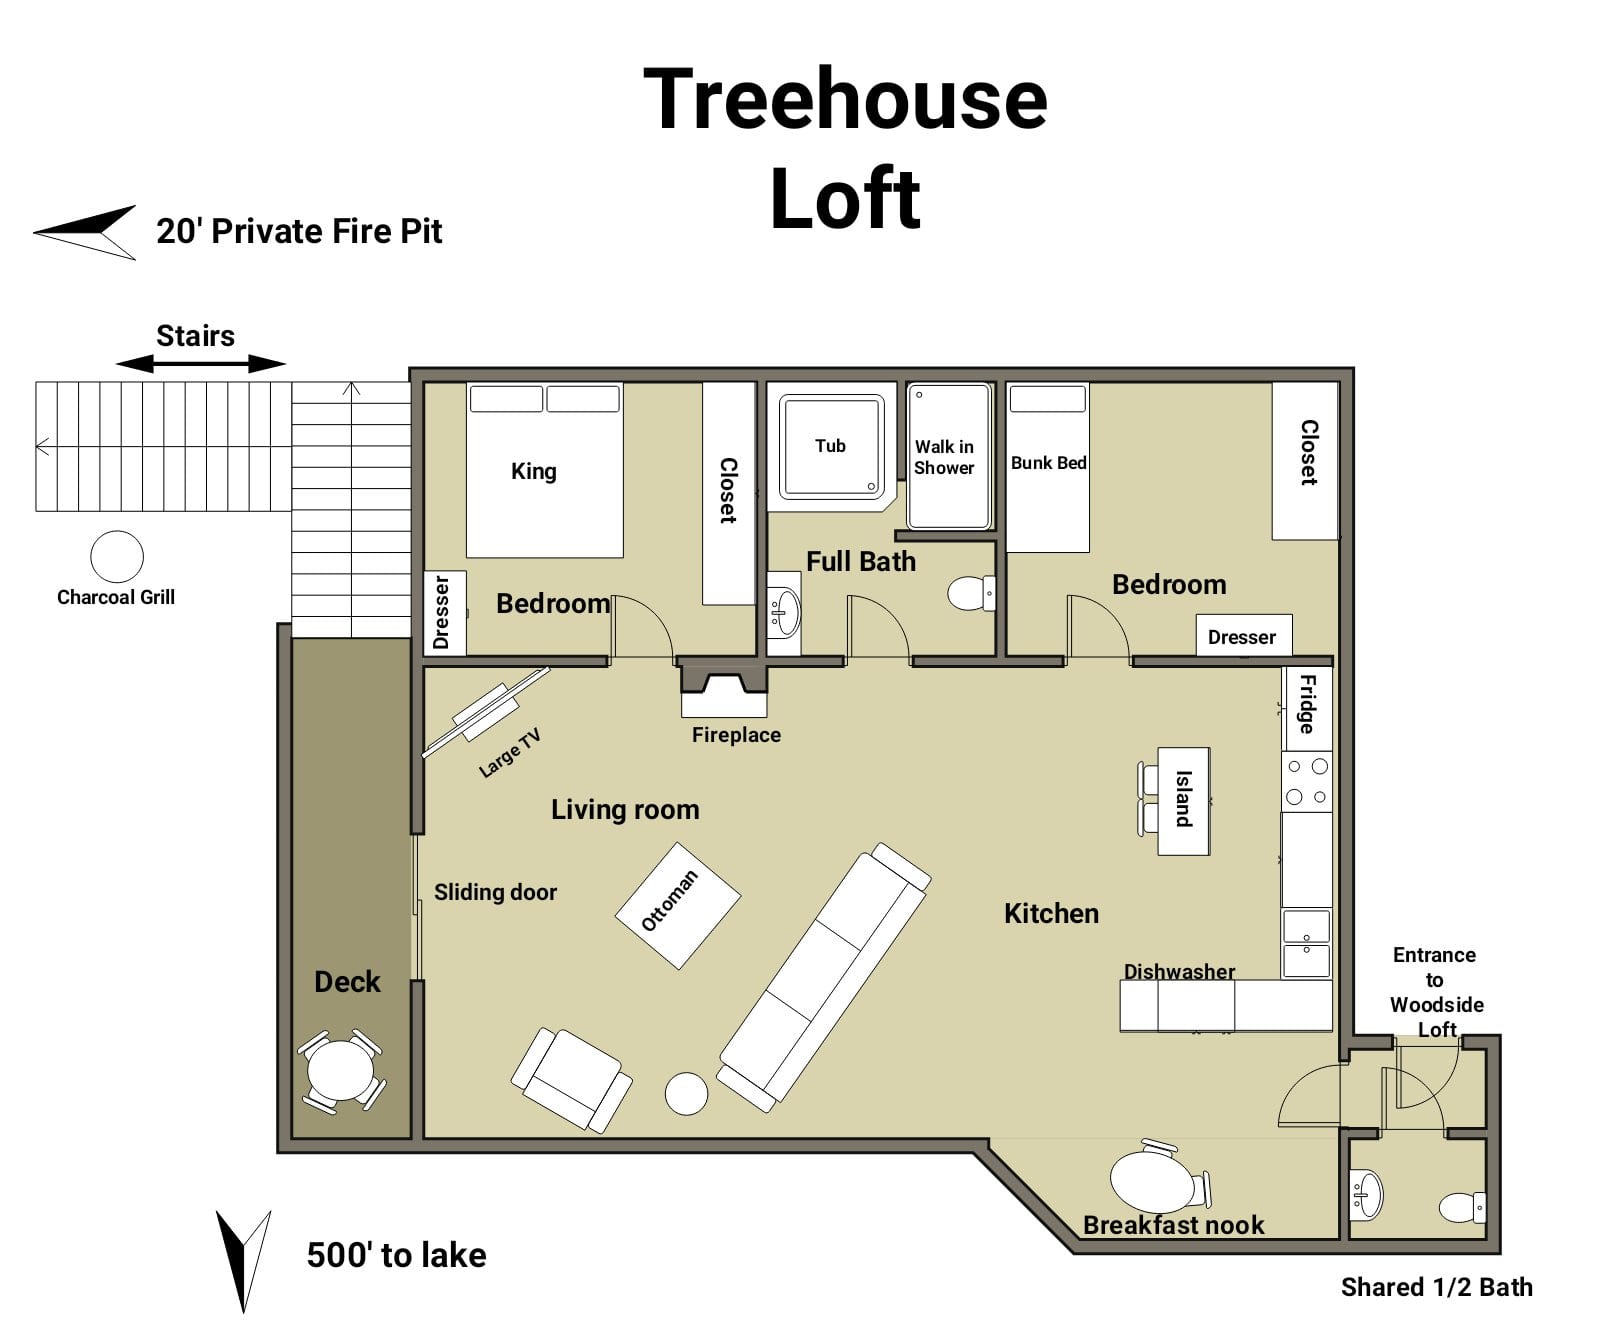 Treehouse Loft floor plan.